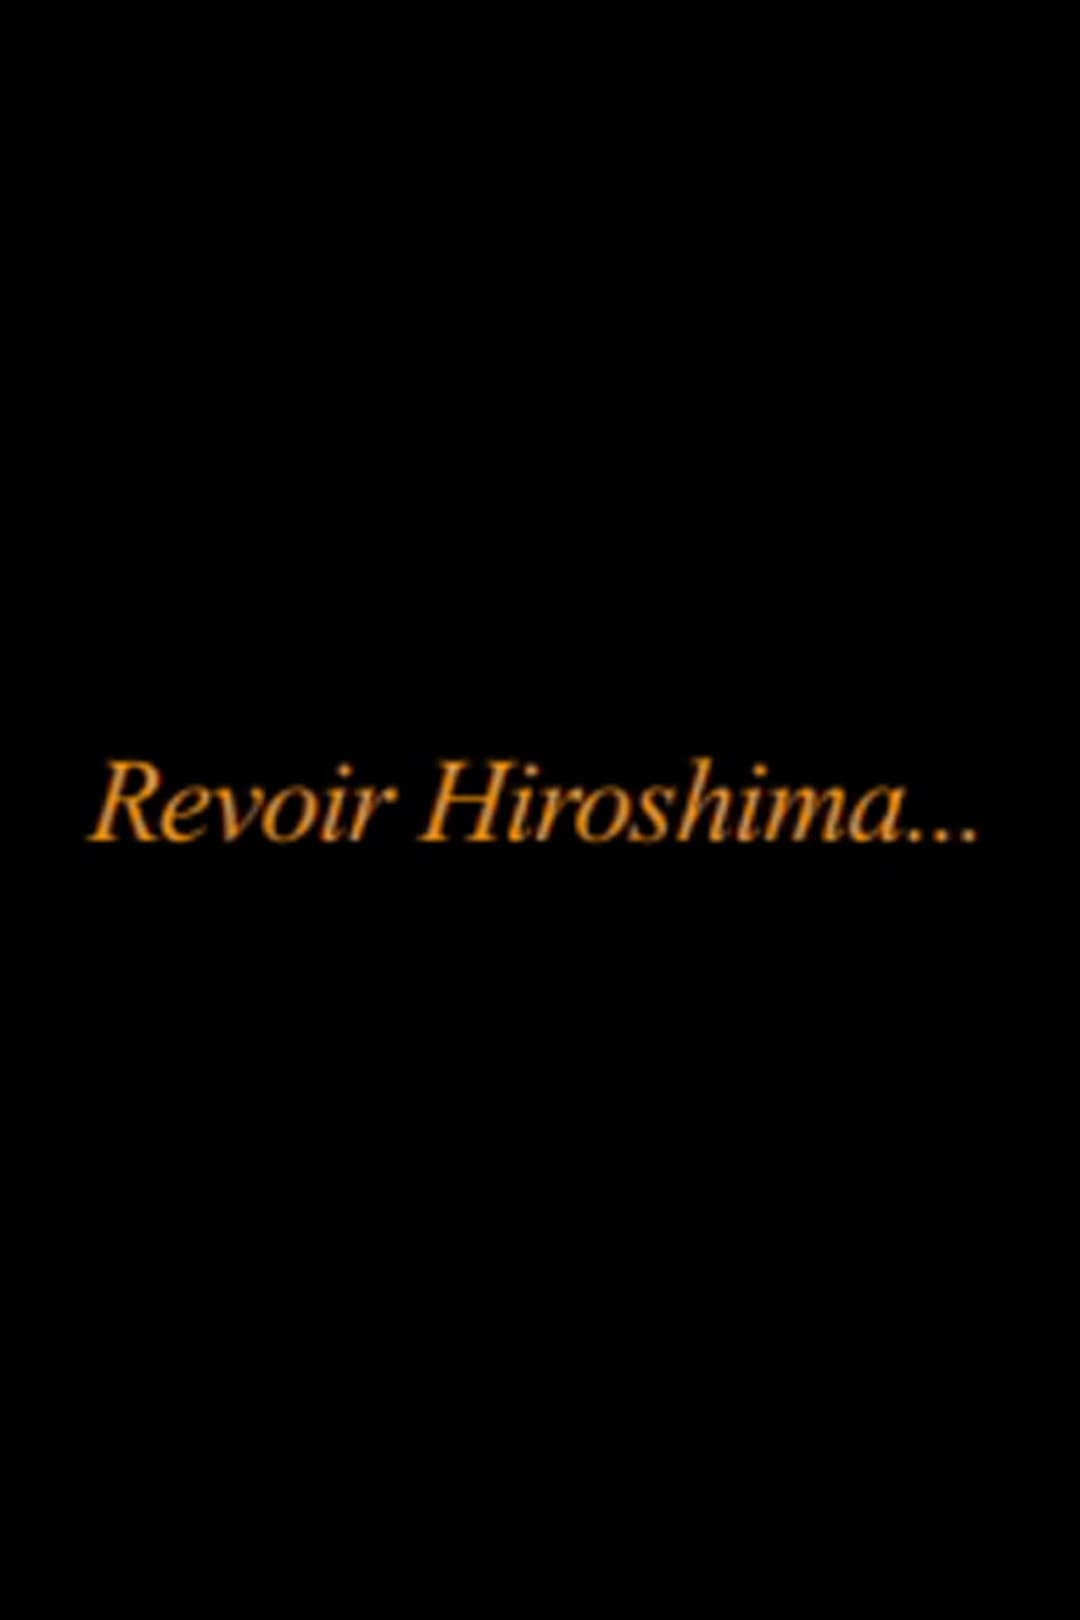 Revoir Hiroshima...